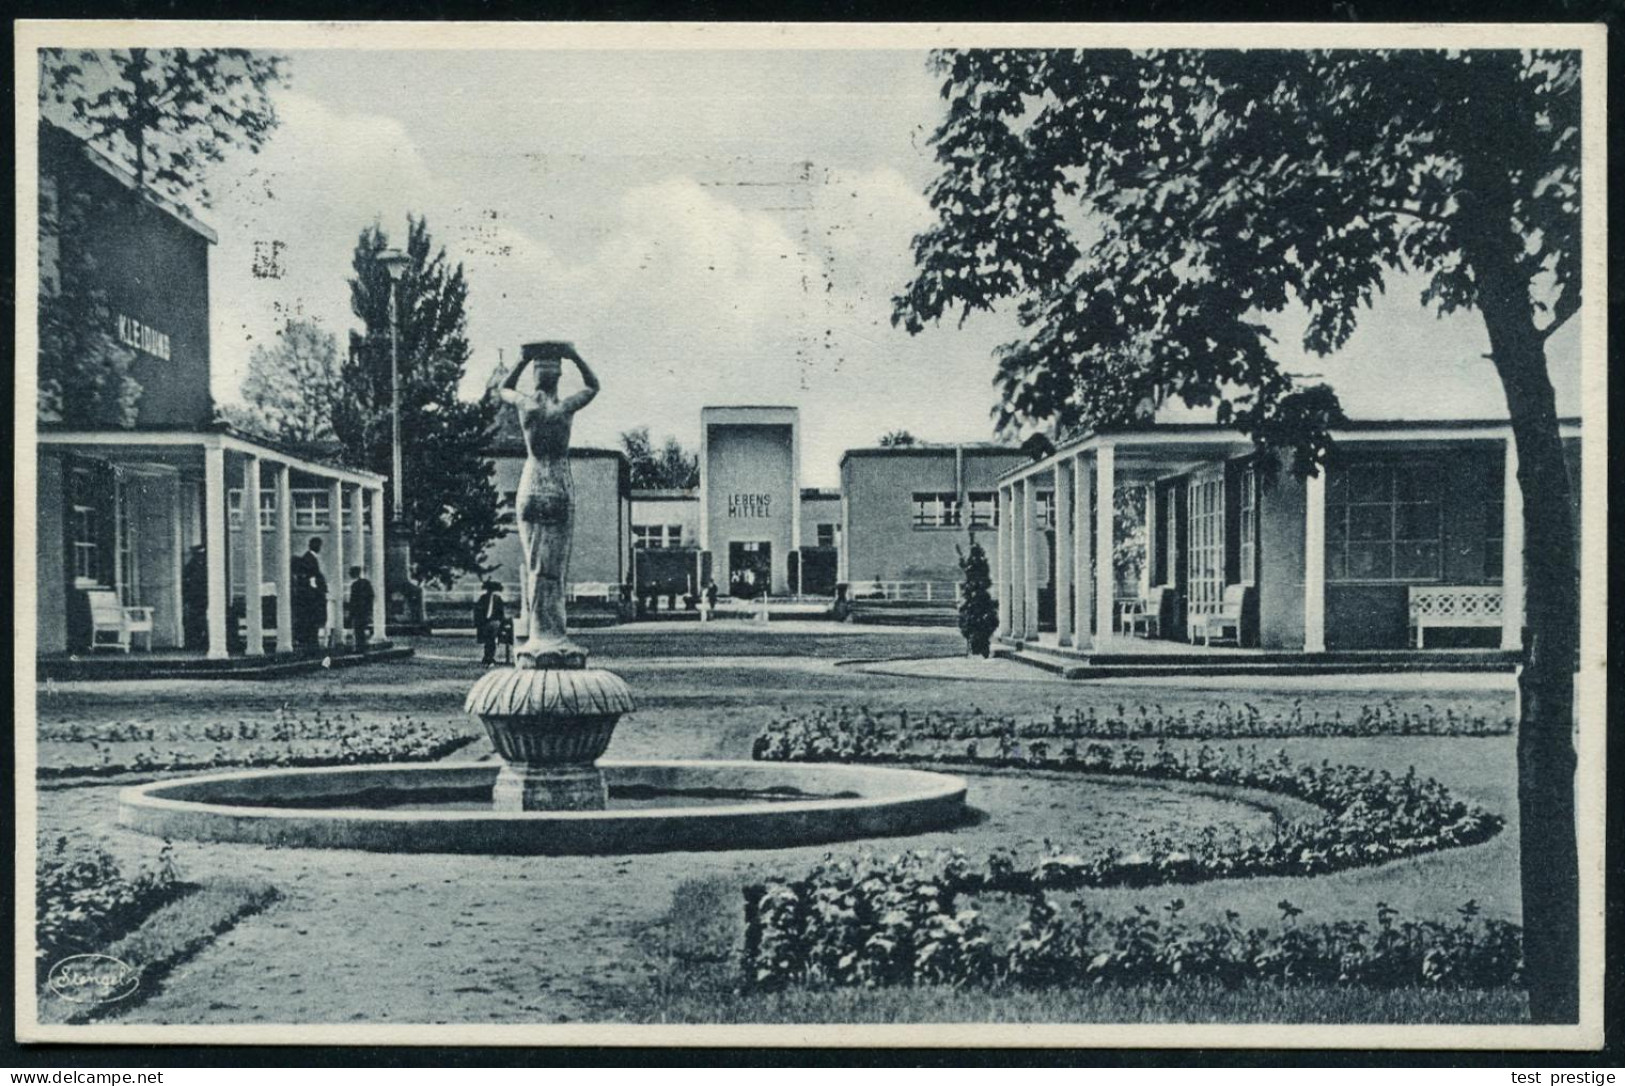 DRESDEN/ AUSSTELLUNG/ INTERNAT.HYGIENE/ AUSSTELLUNG.. 1930 (10.6.) MWSt = Sonne Hinter Hygiene-Museum , Klar Gest. Ausst - Medicina